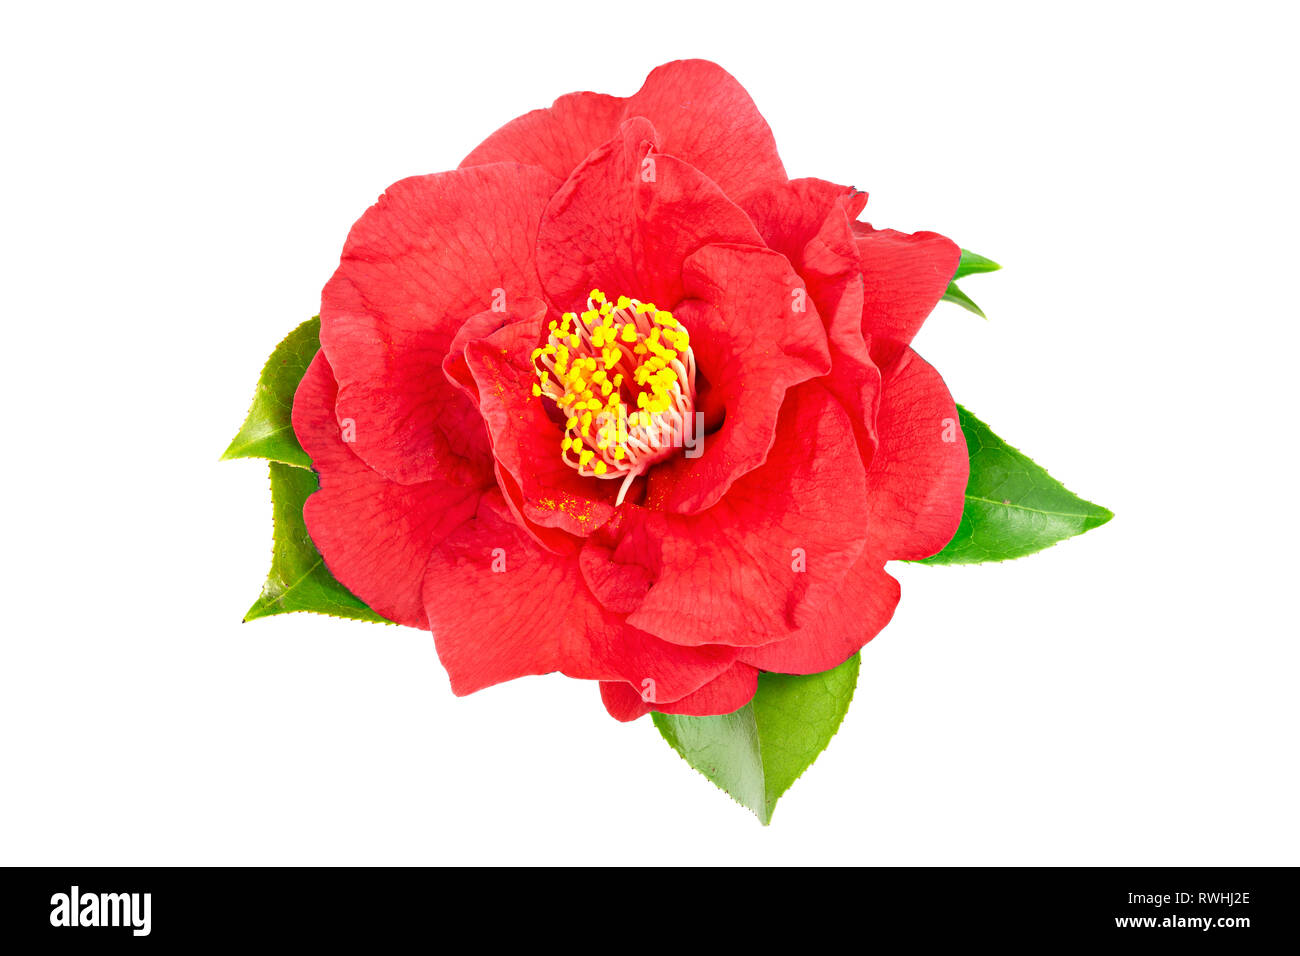 Red camellia flower isolated on white background. Camellia sasanqua Stock Photo